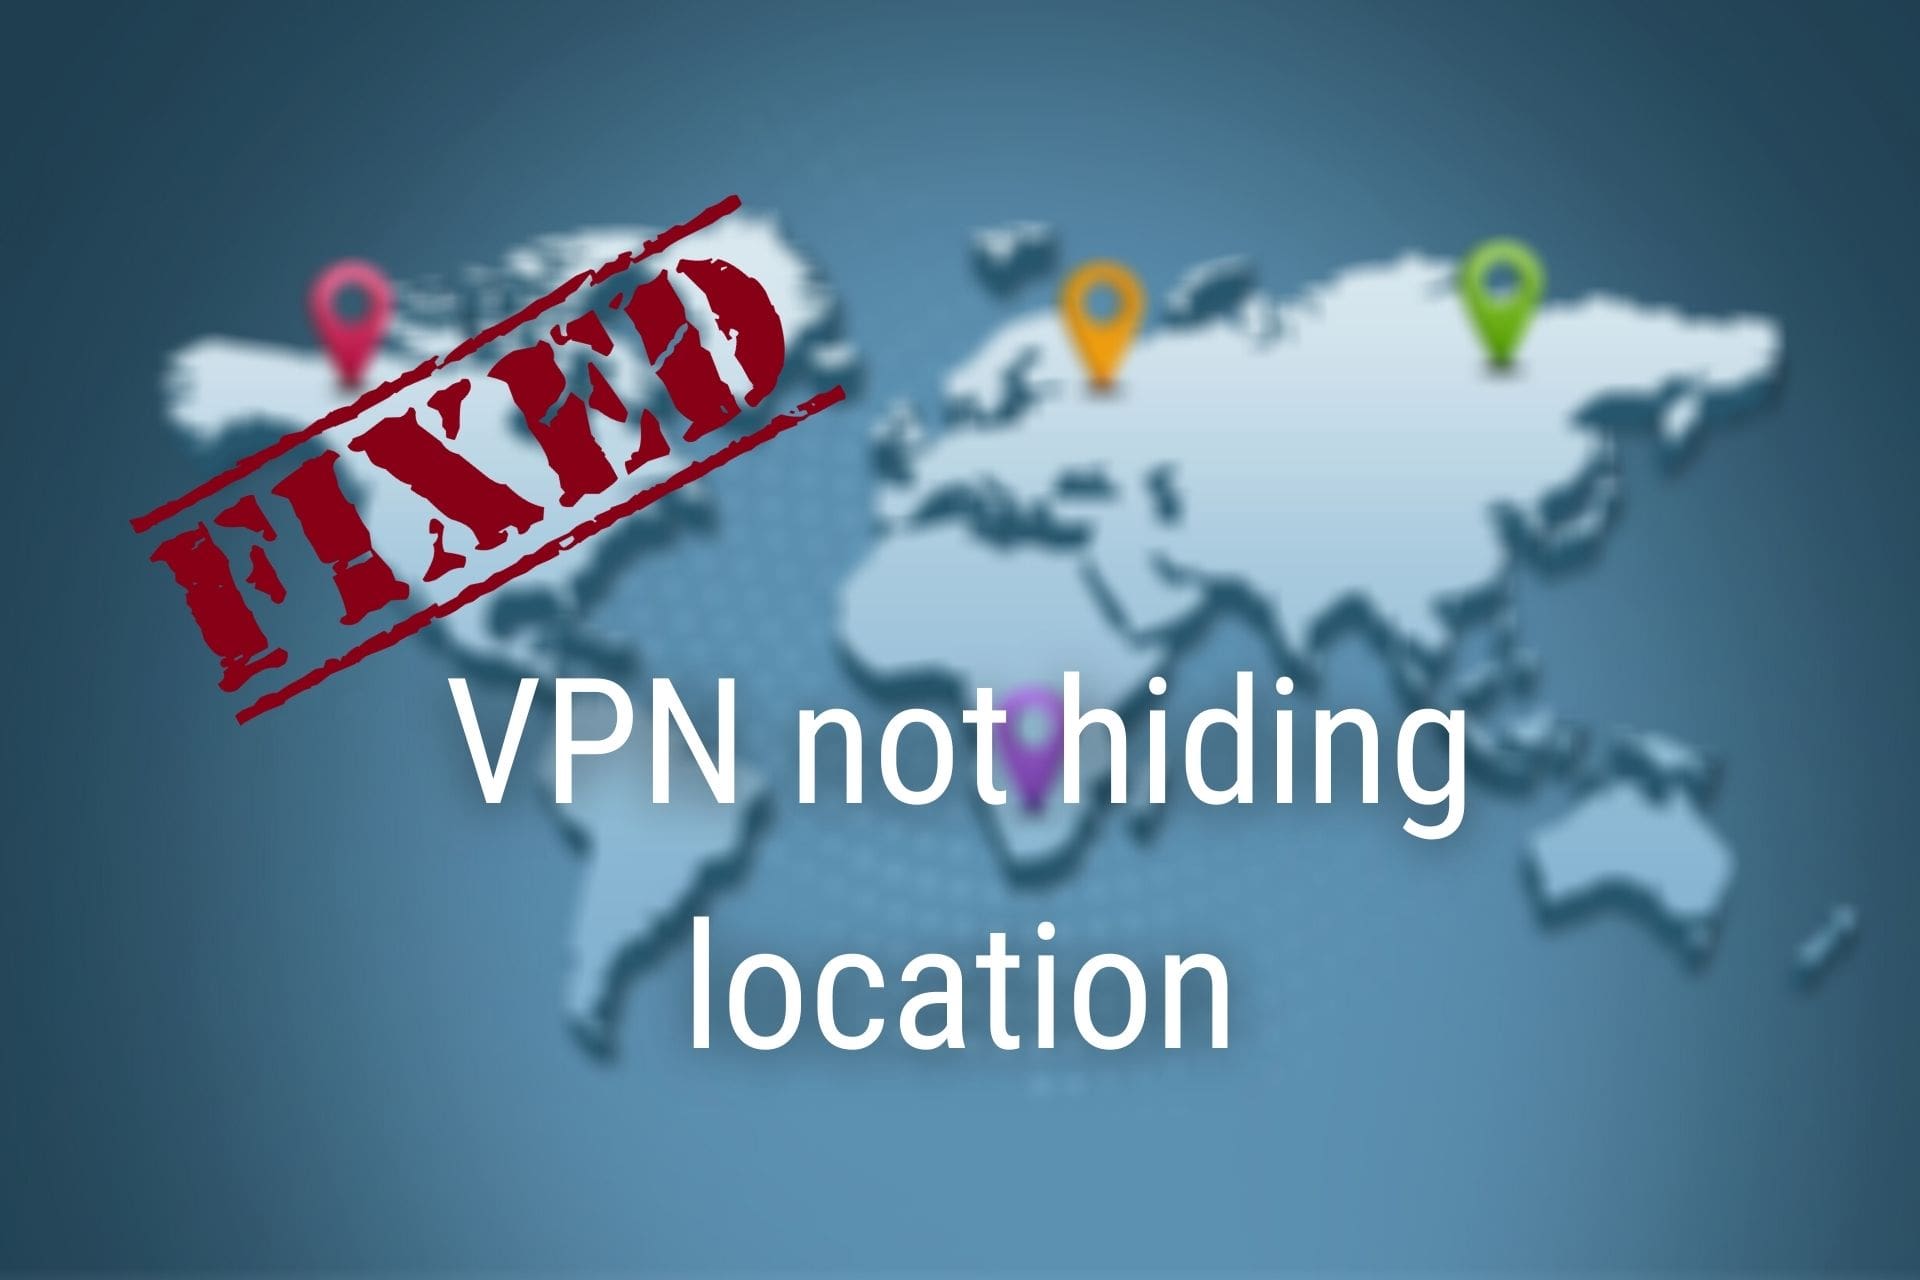 fix VPN not hiding location